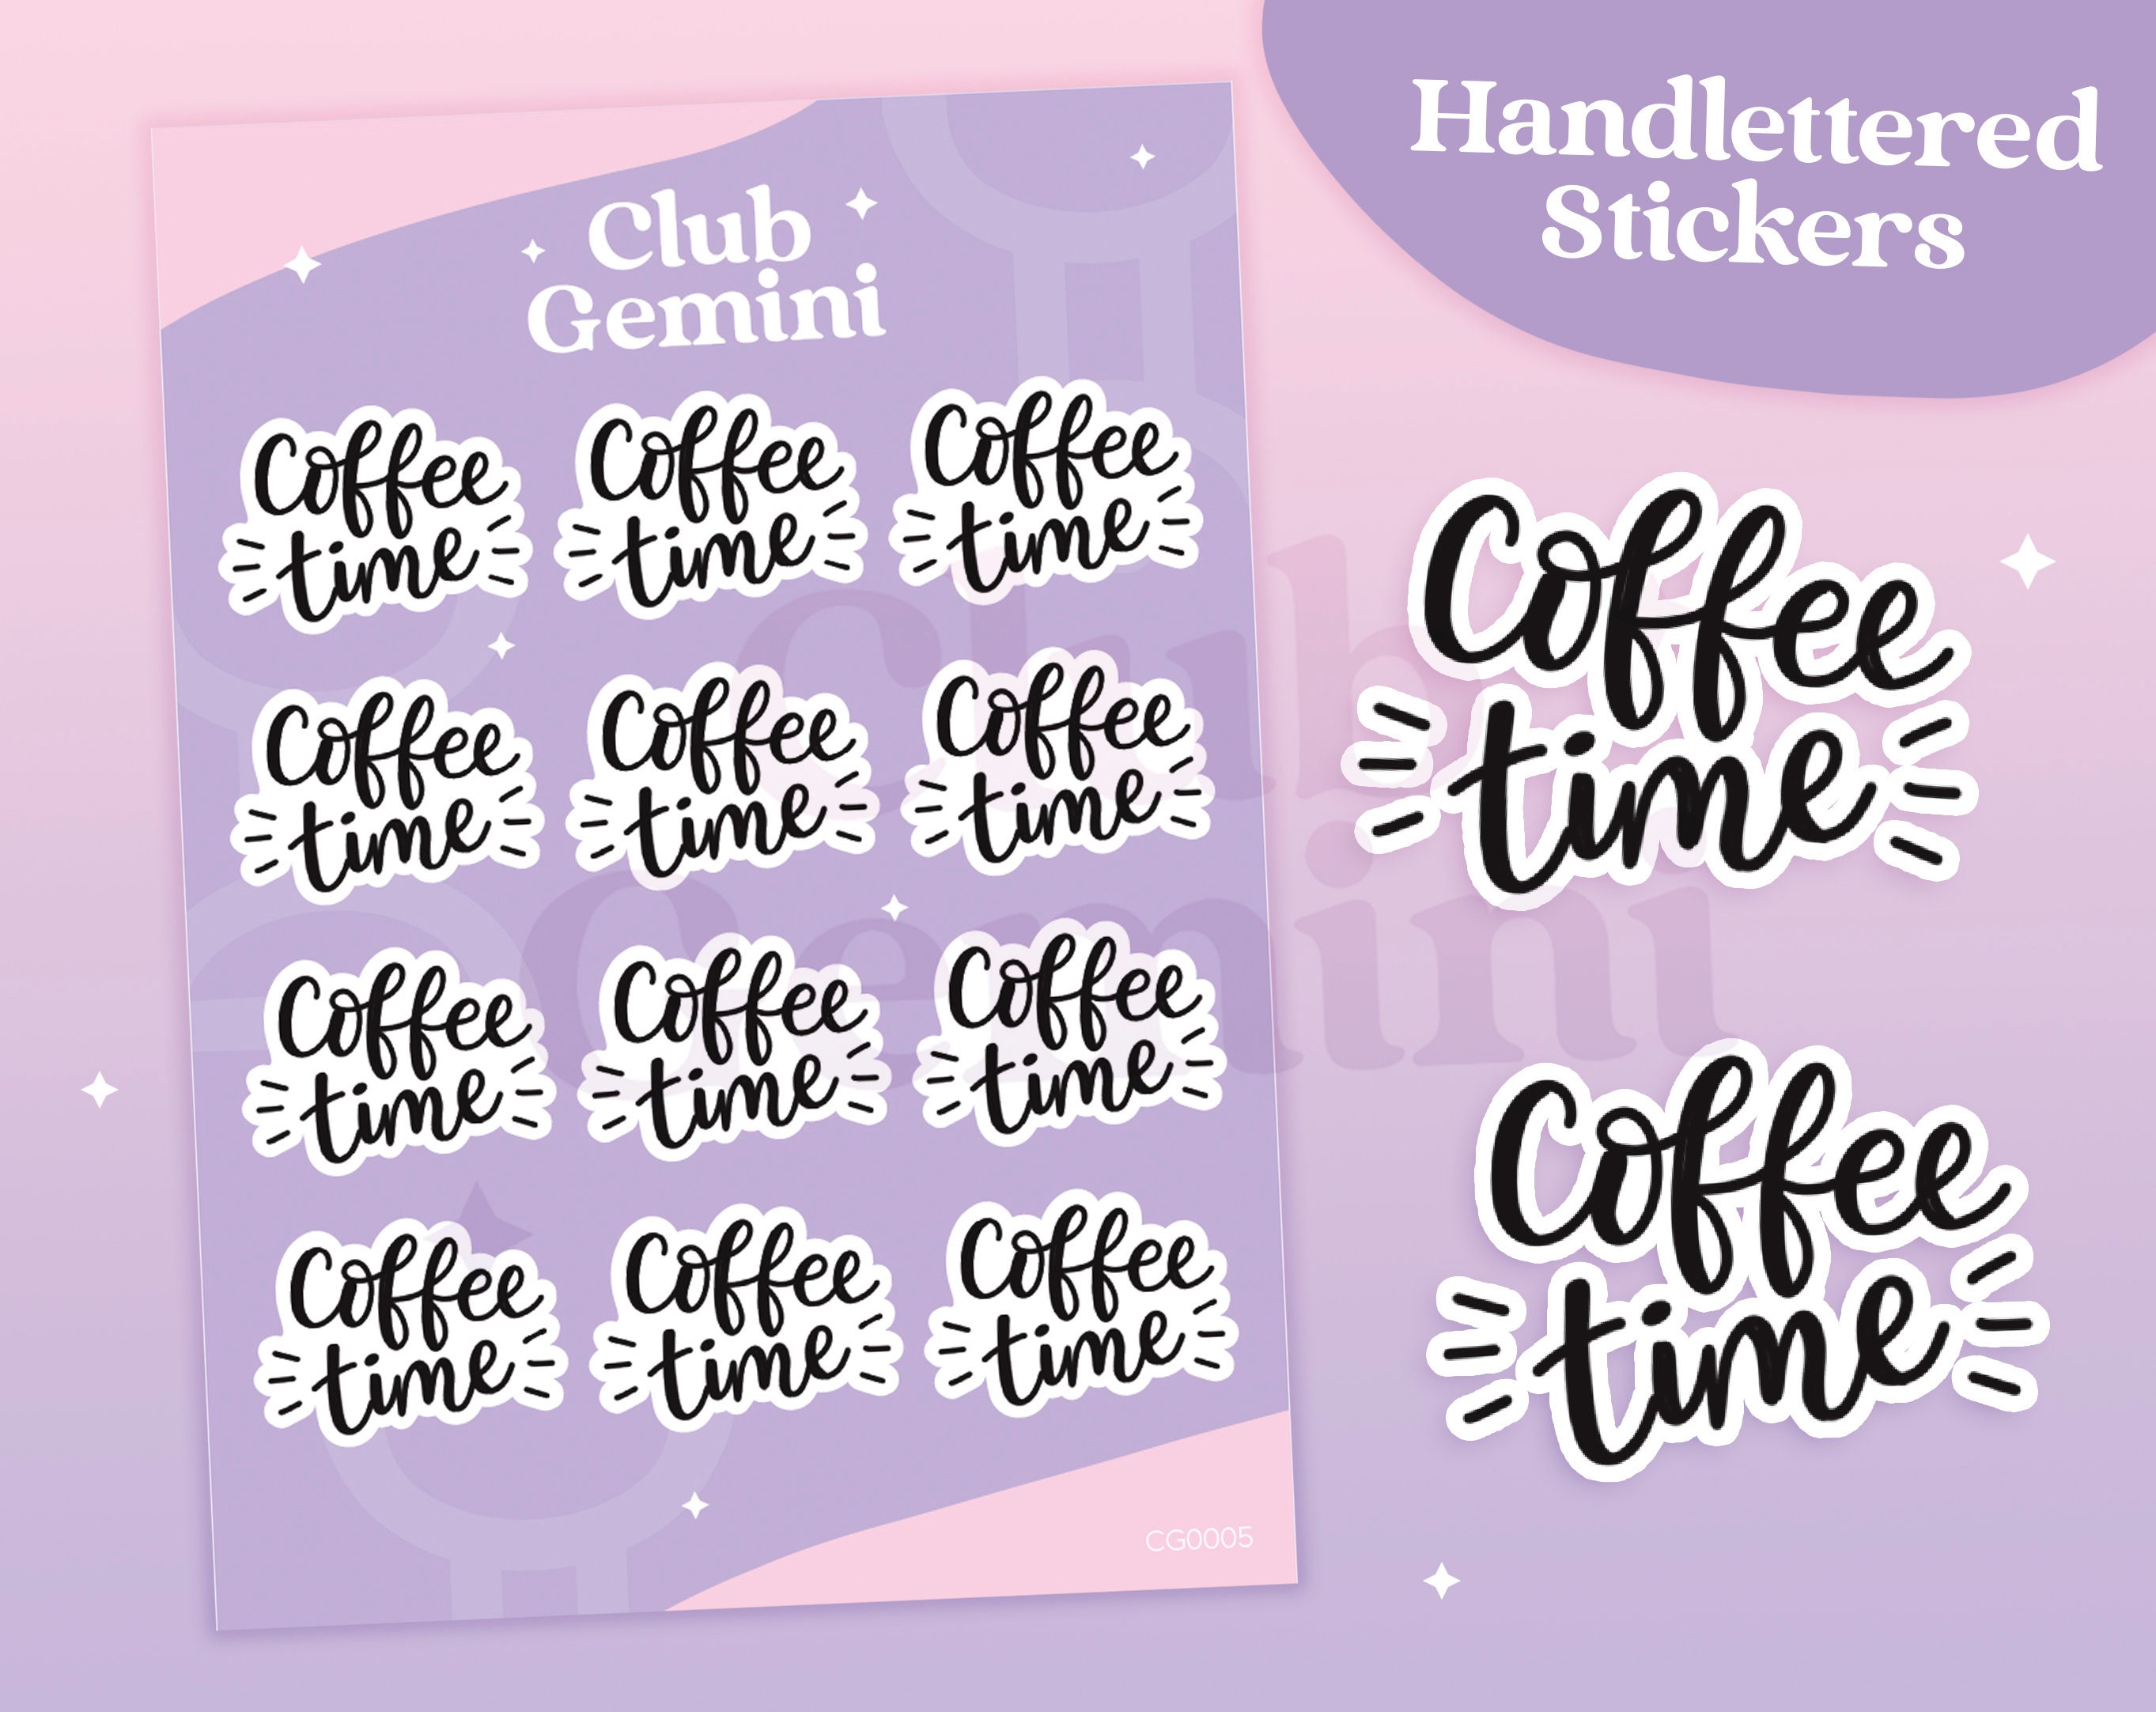 Coffee & Tea Sticker Sheet Bullet Journal Stickers, Planner